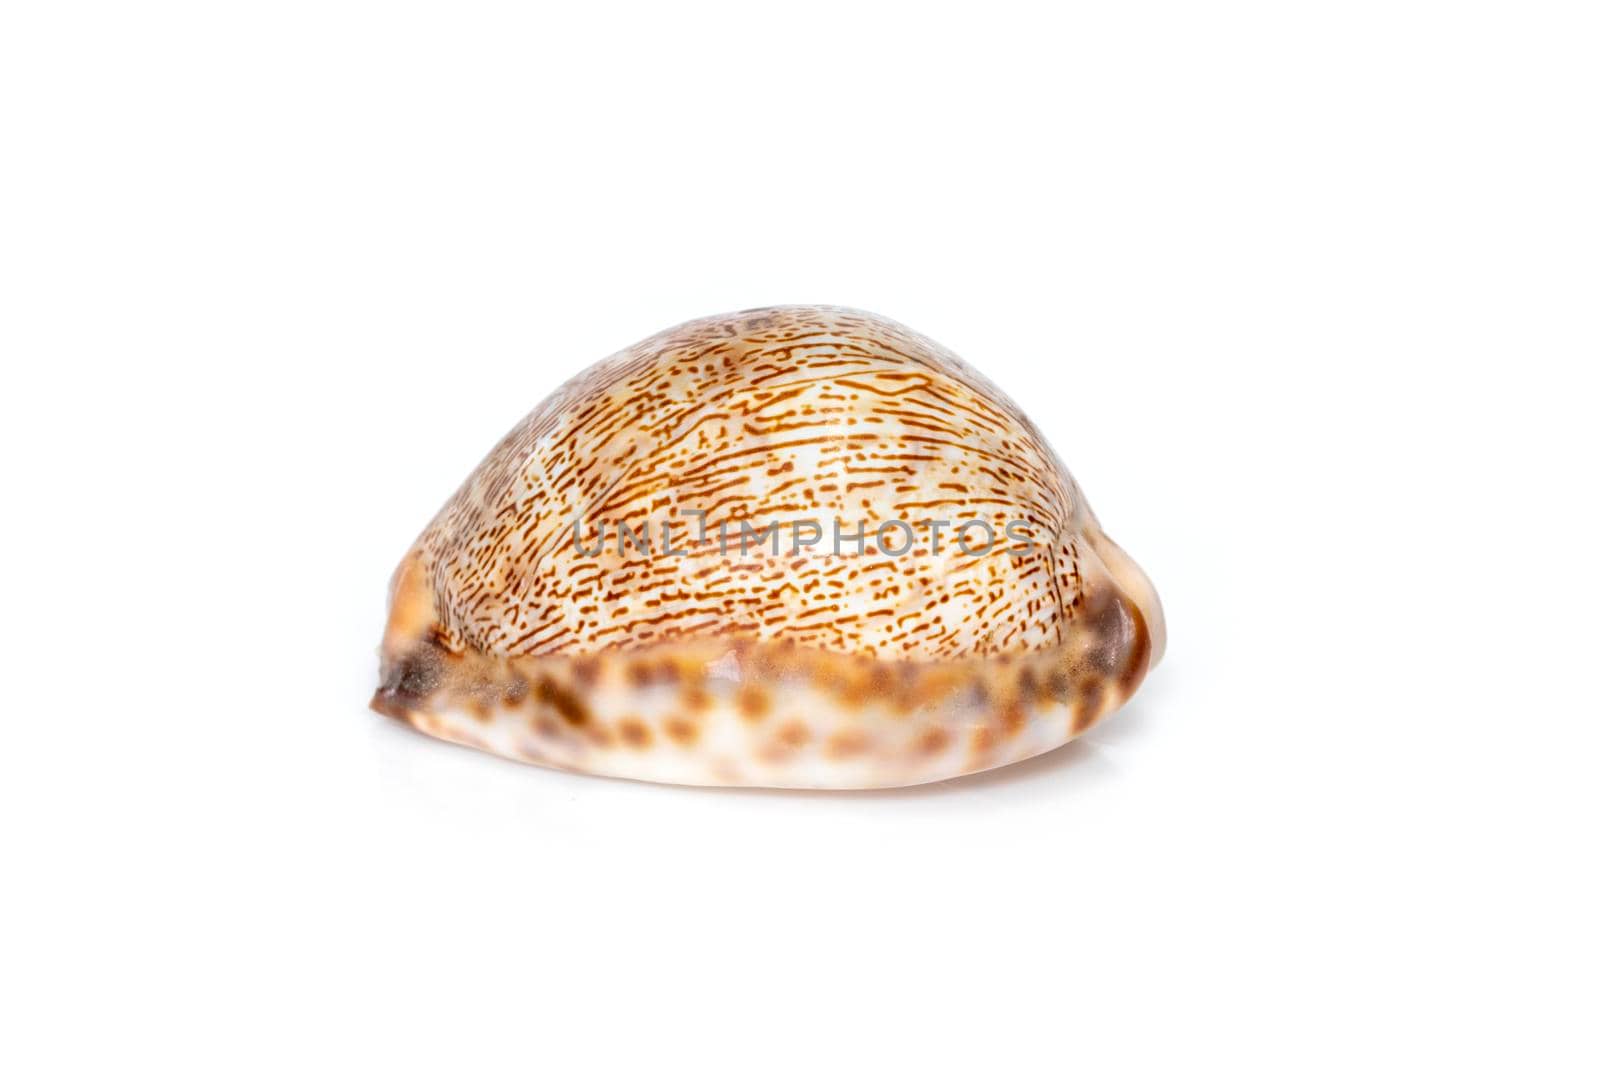 Image of Image of seashells cypraea arabica on a white background. Undersea Animals. Sea Shells.seashells cypaea arabica on a white background. Undersea Animals. Sea Shells. by yod67